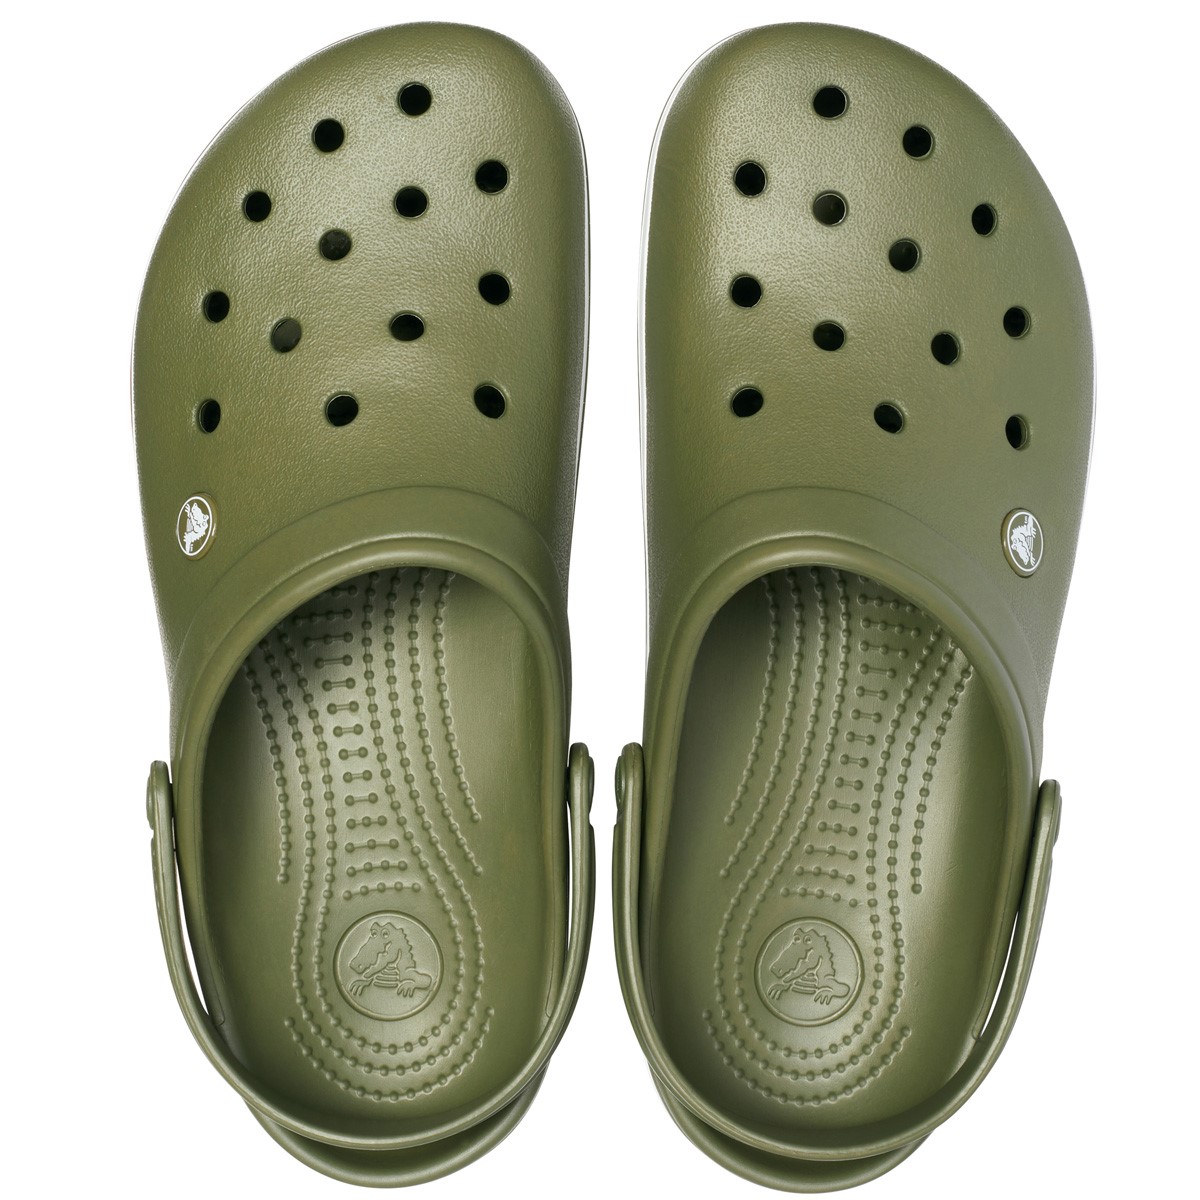 Crocs Unisex Sandalet 11016 Army Green/White